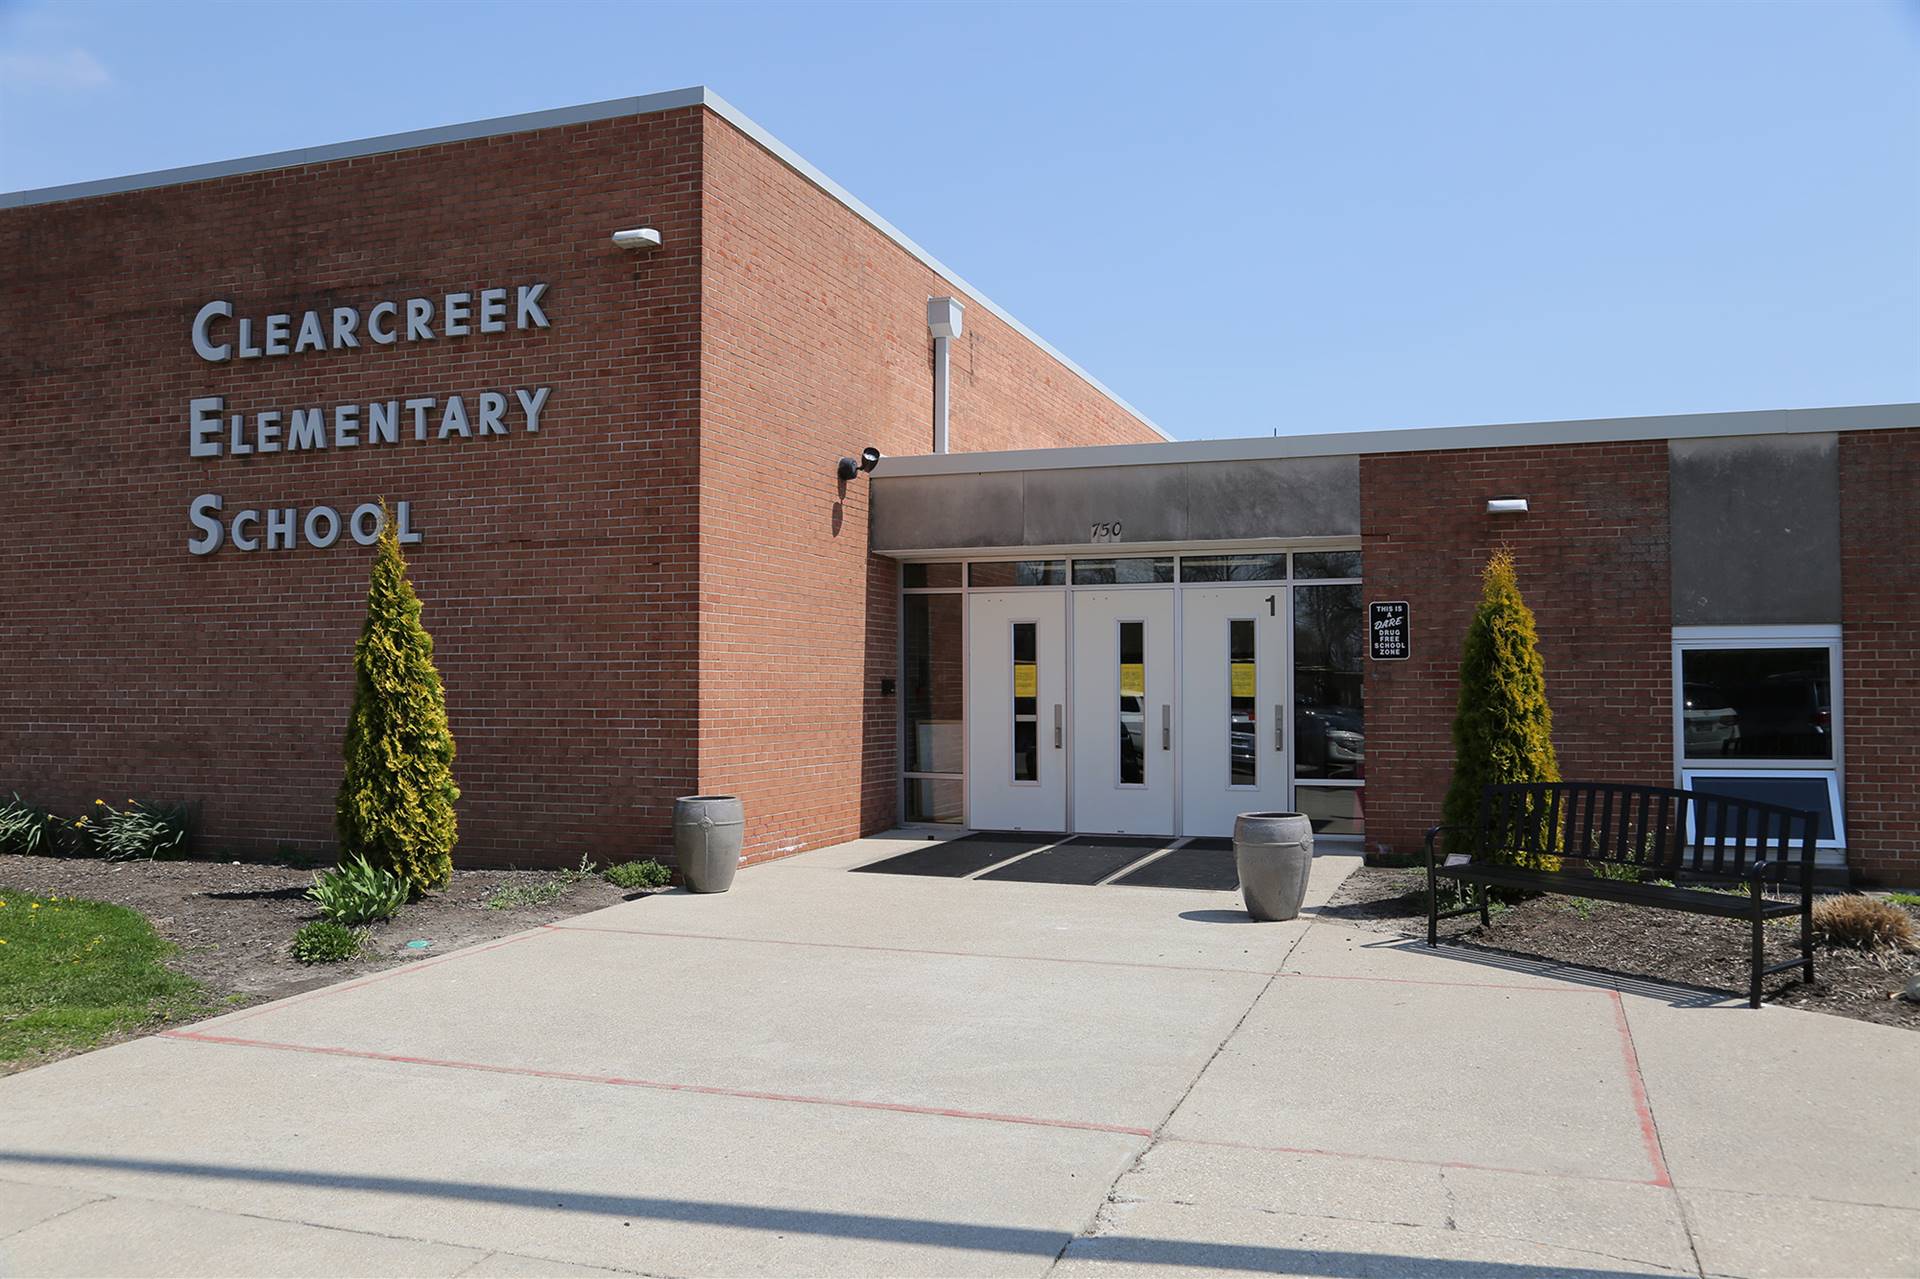 Clearcreek Elementary